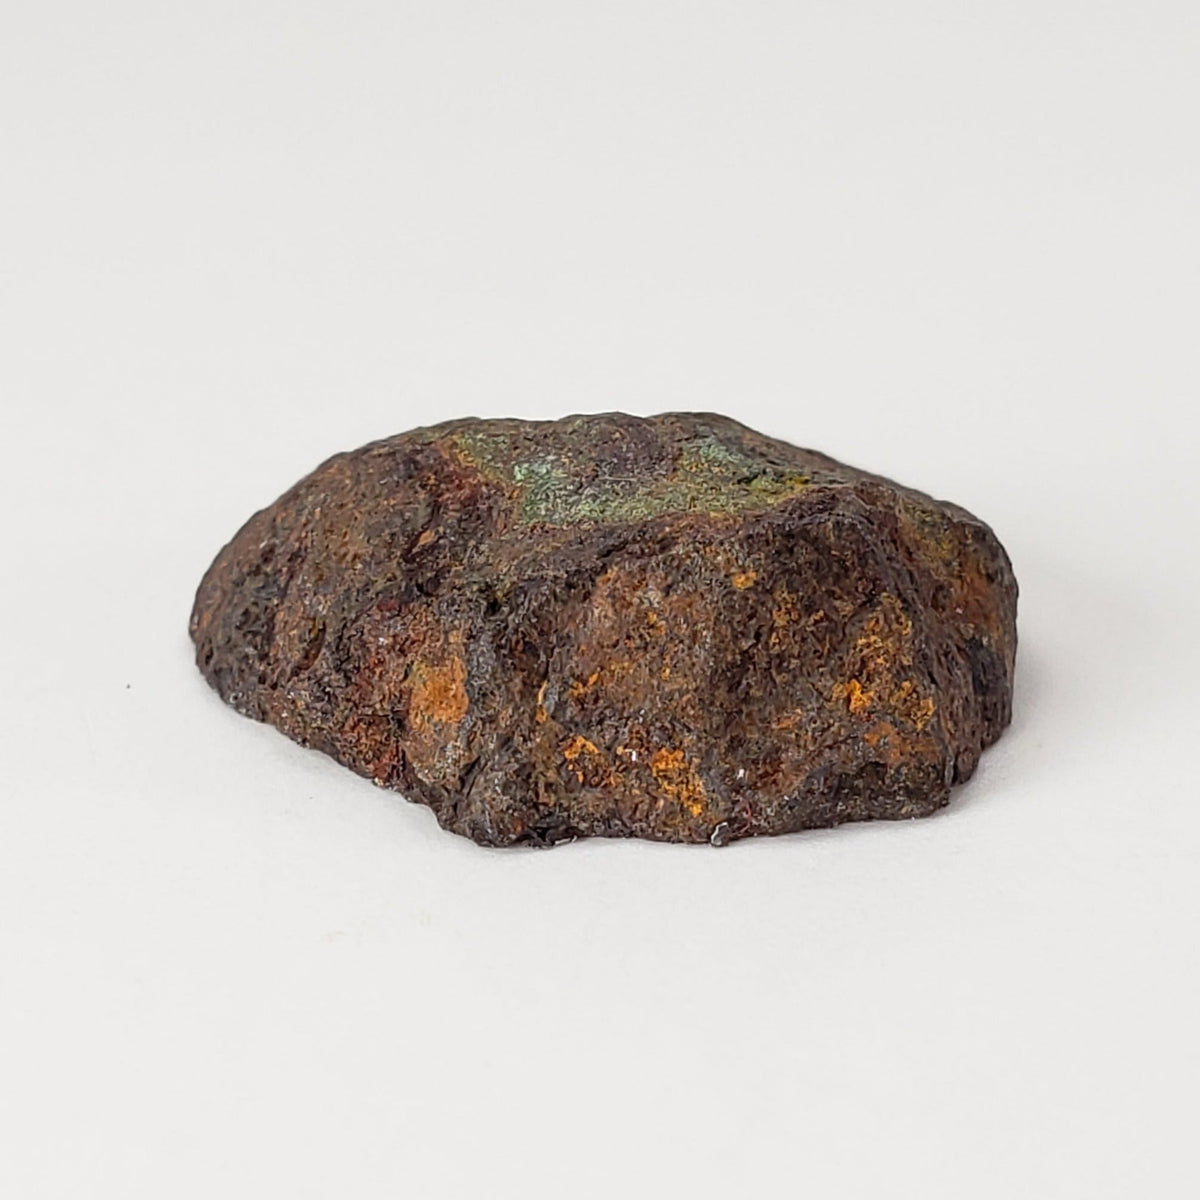 Vaca Muerta Meteorite | 2.76 Grams | End Cut | Mesosiderite A1 | Famous | Chile